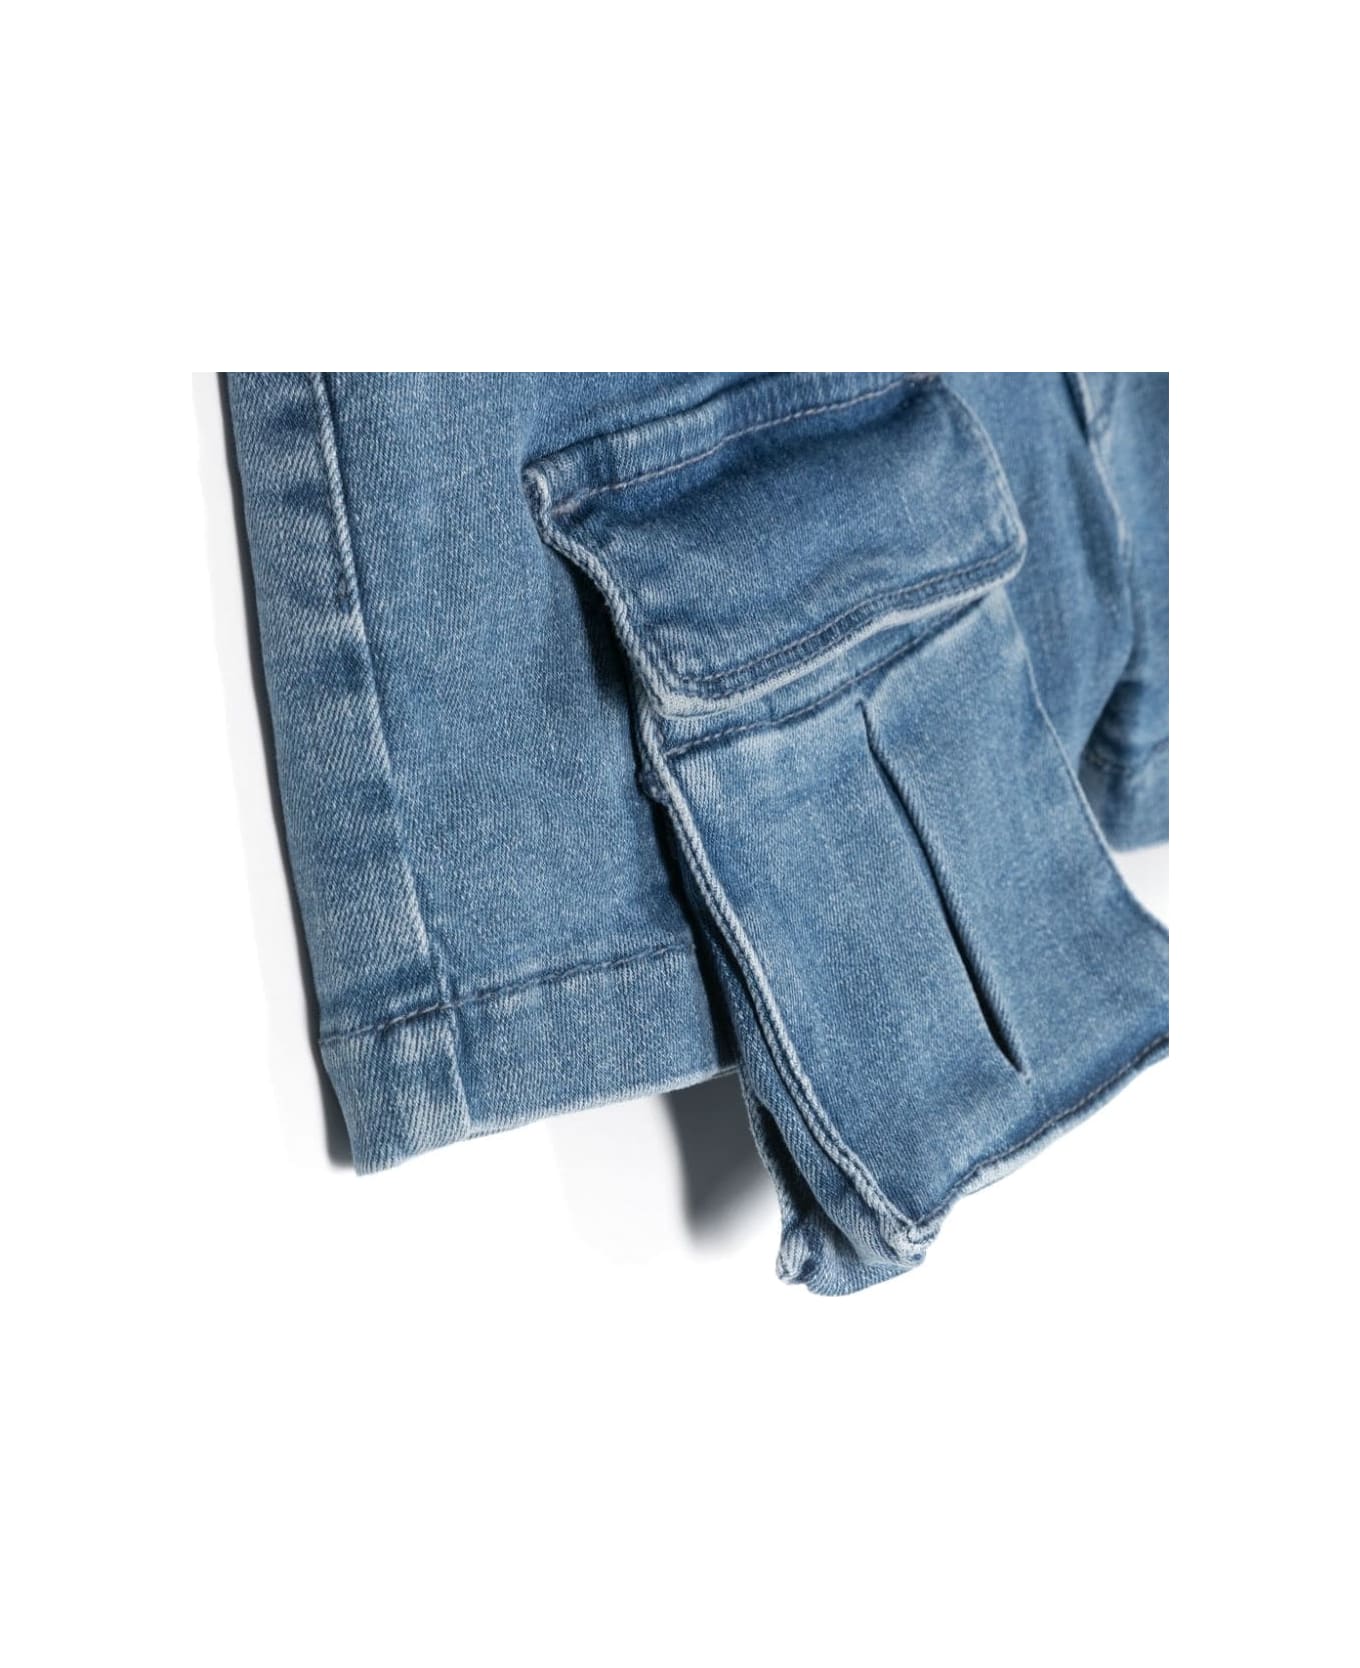 Miss Blumarine Blue Denim Cargo Shorts - DENIM BLUE